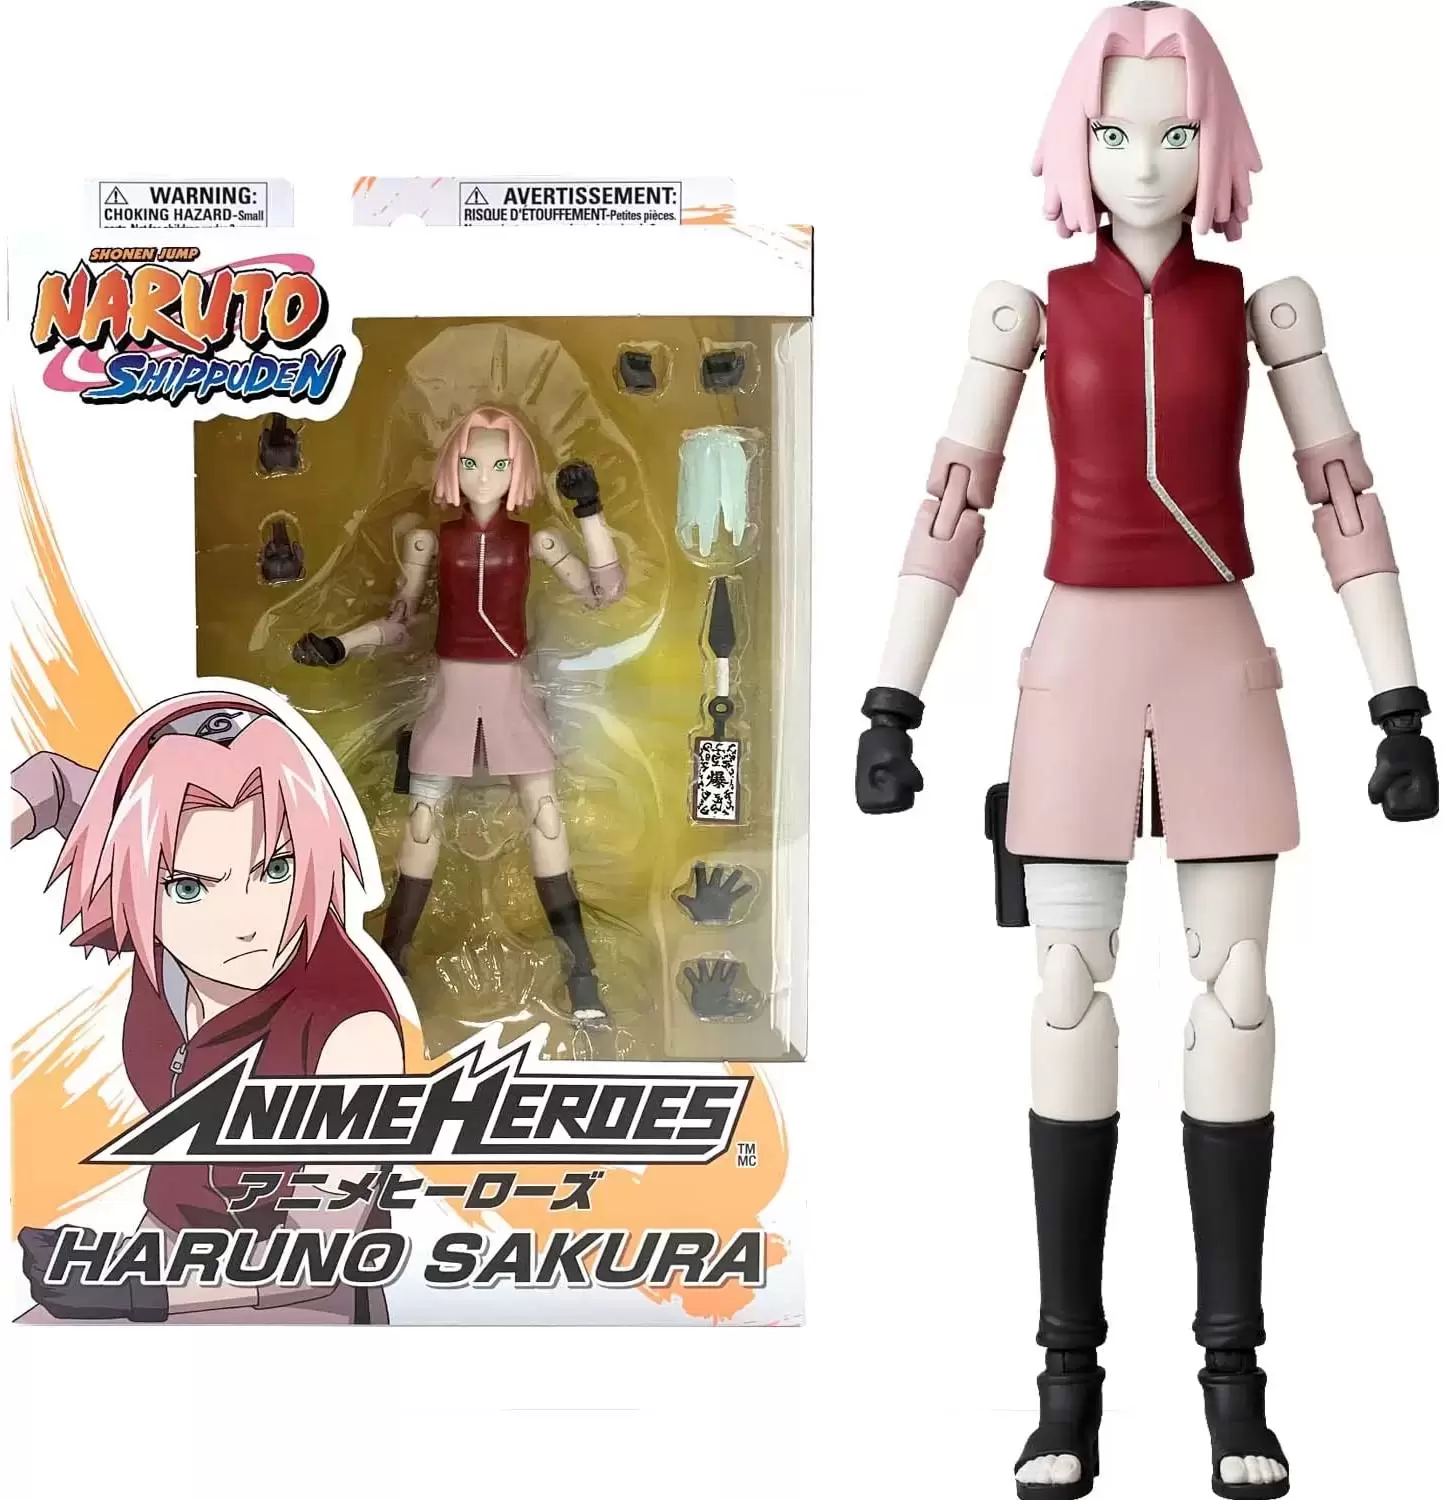  ANIME HEROES - Naruto - Sakura Haruno Action Figure :  Everything Else